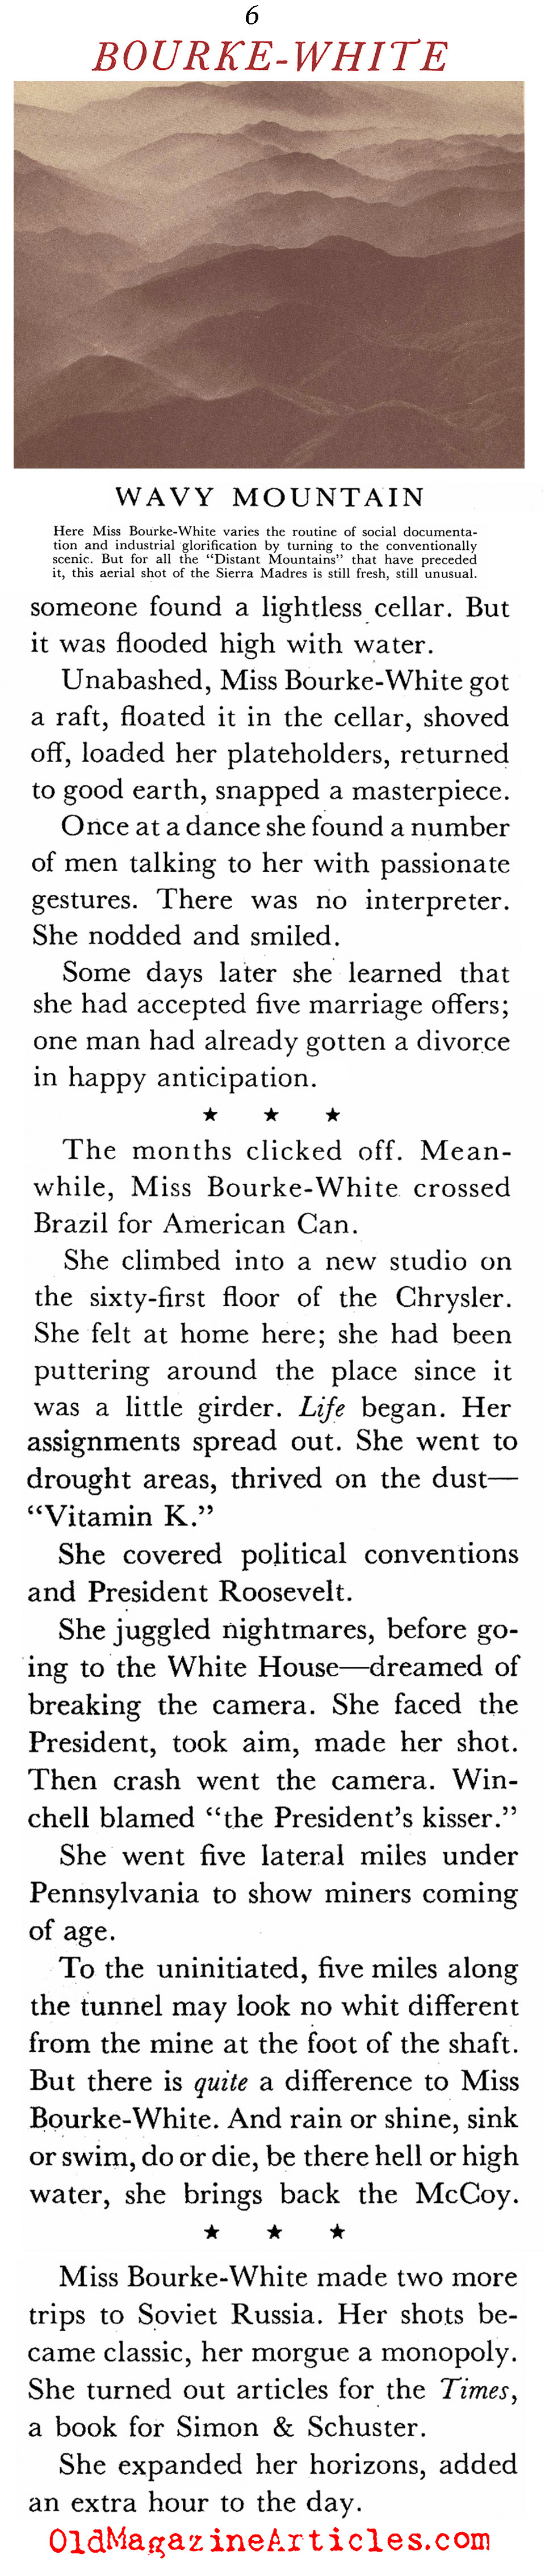 Margaret Bourke-White (Coronet Magazine, 1939)